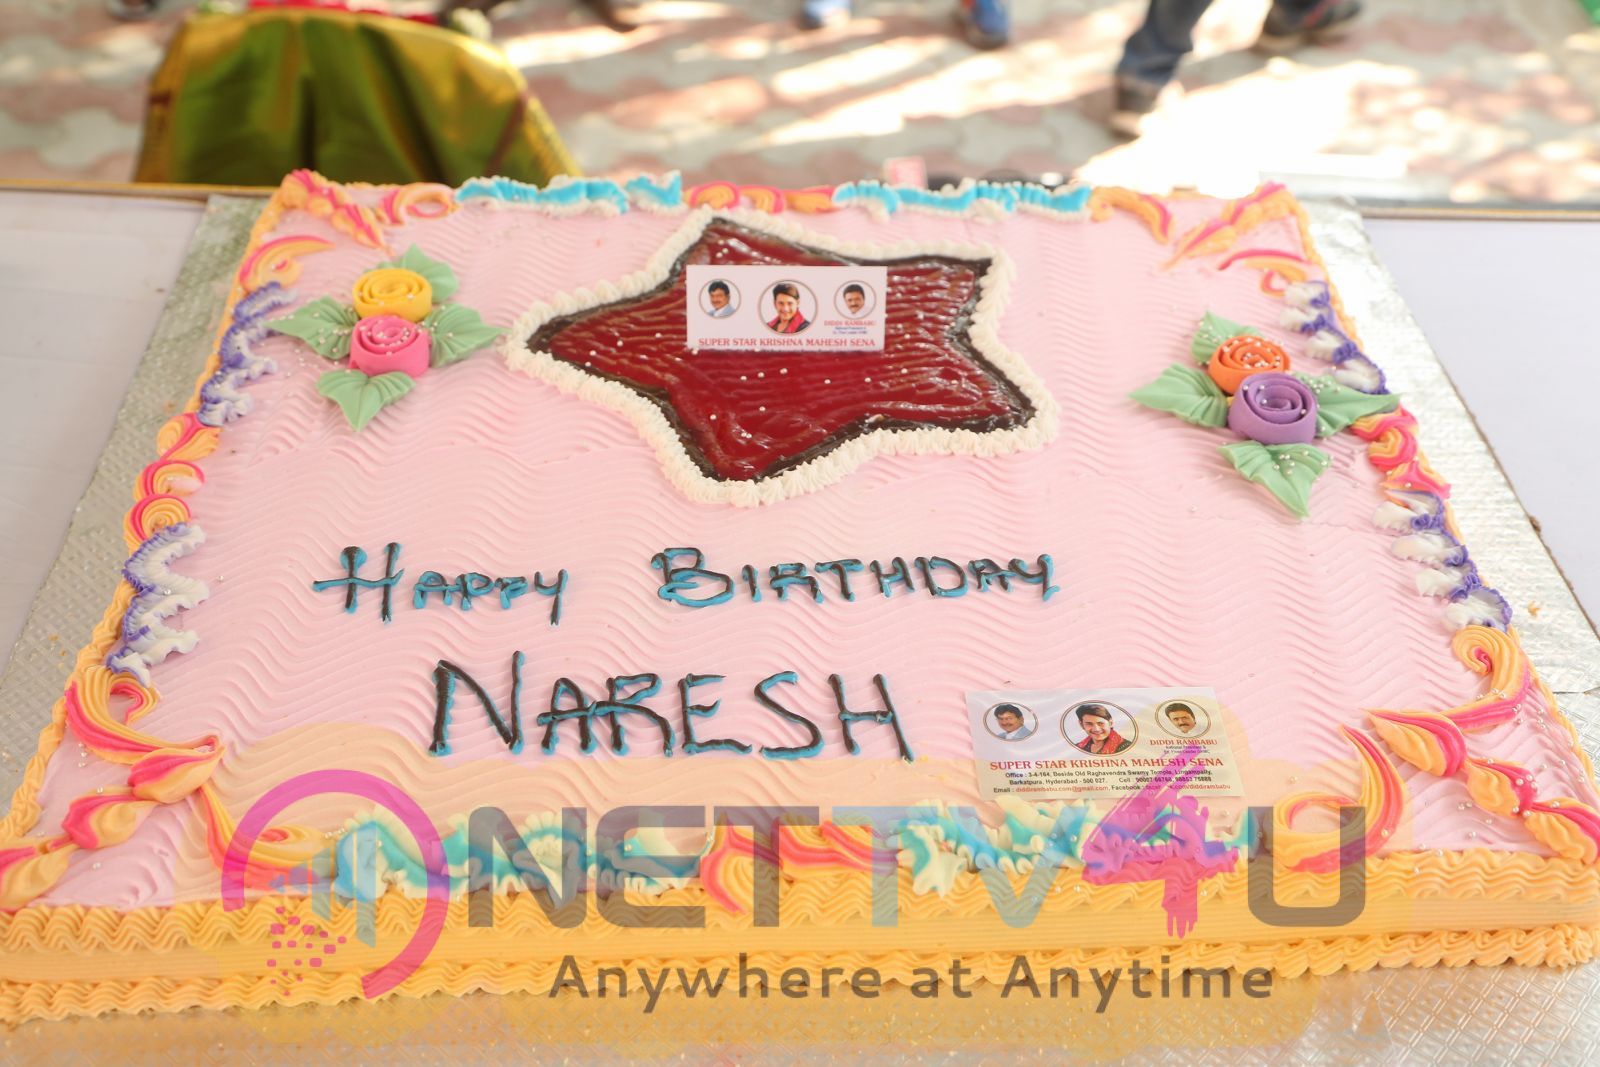 Actor Naresh Birthday Celebrations Images Telugu Gallery